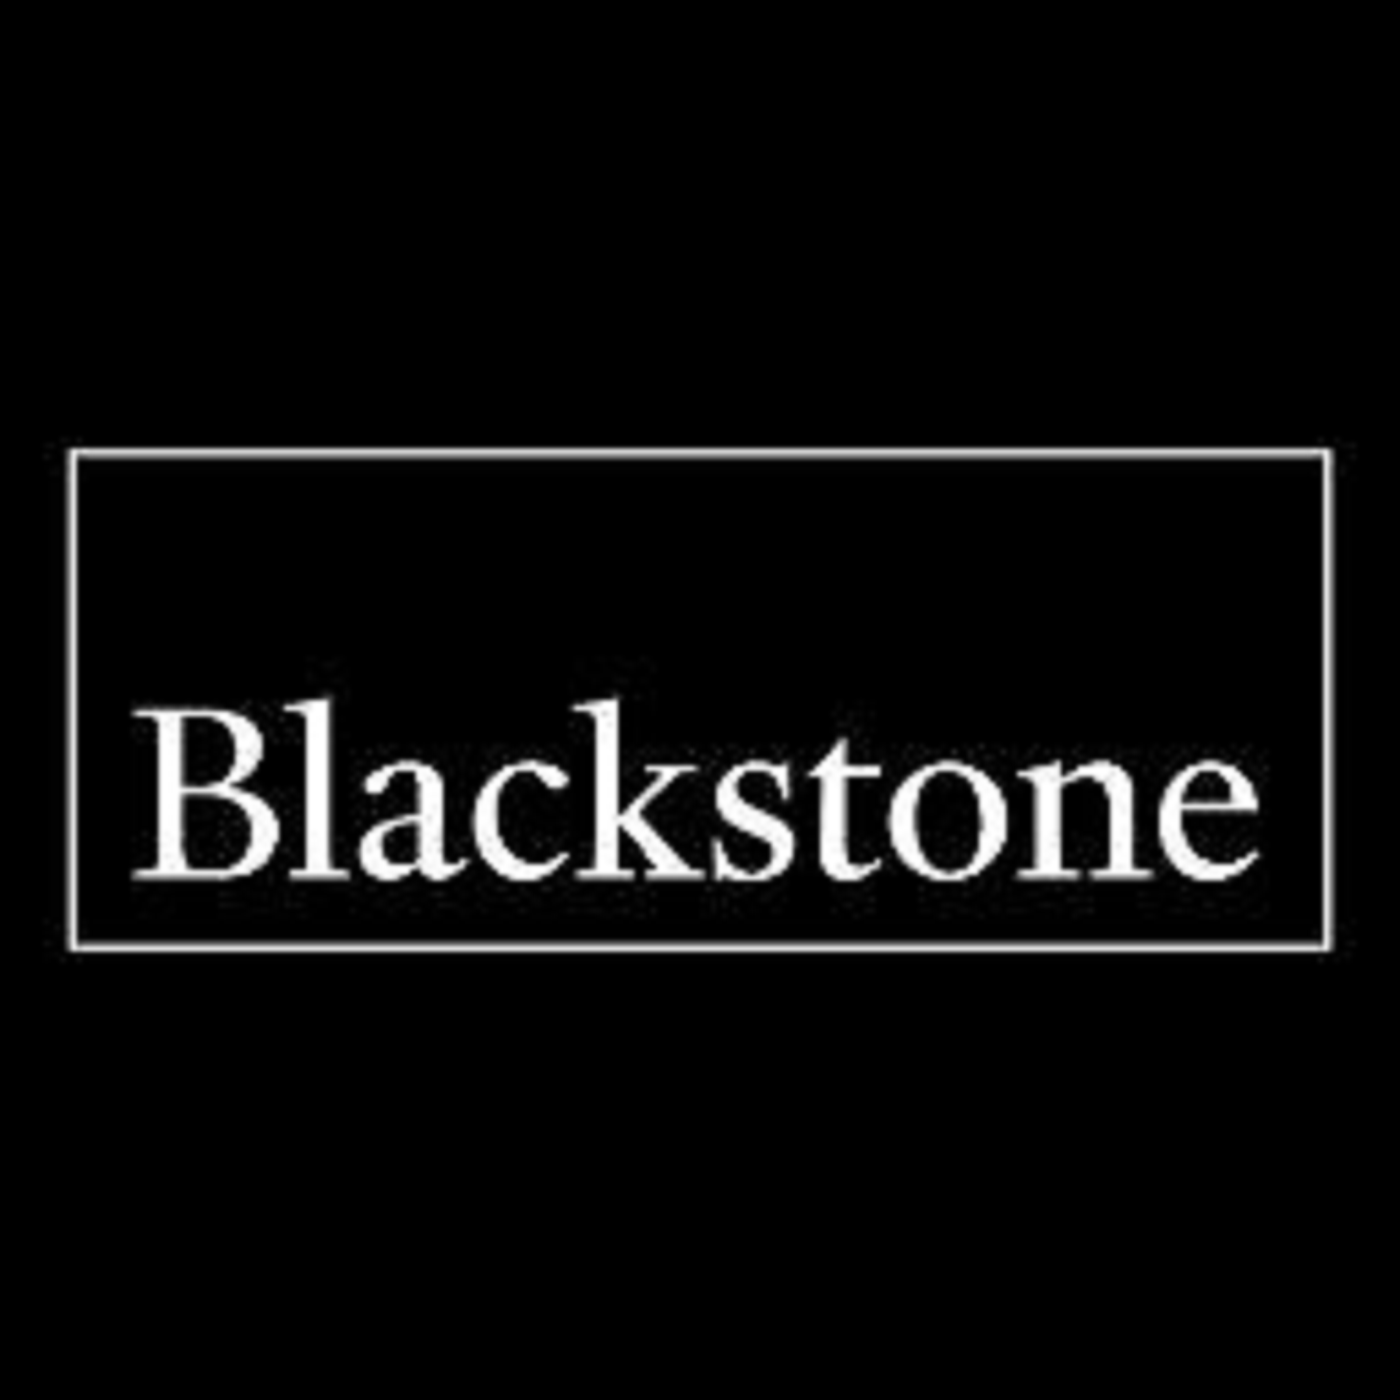 Blackstone Q4 and Full Year 2015 Media Call